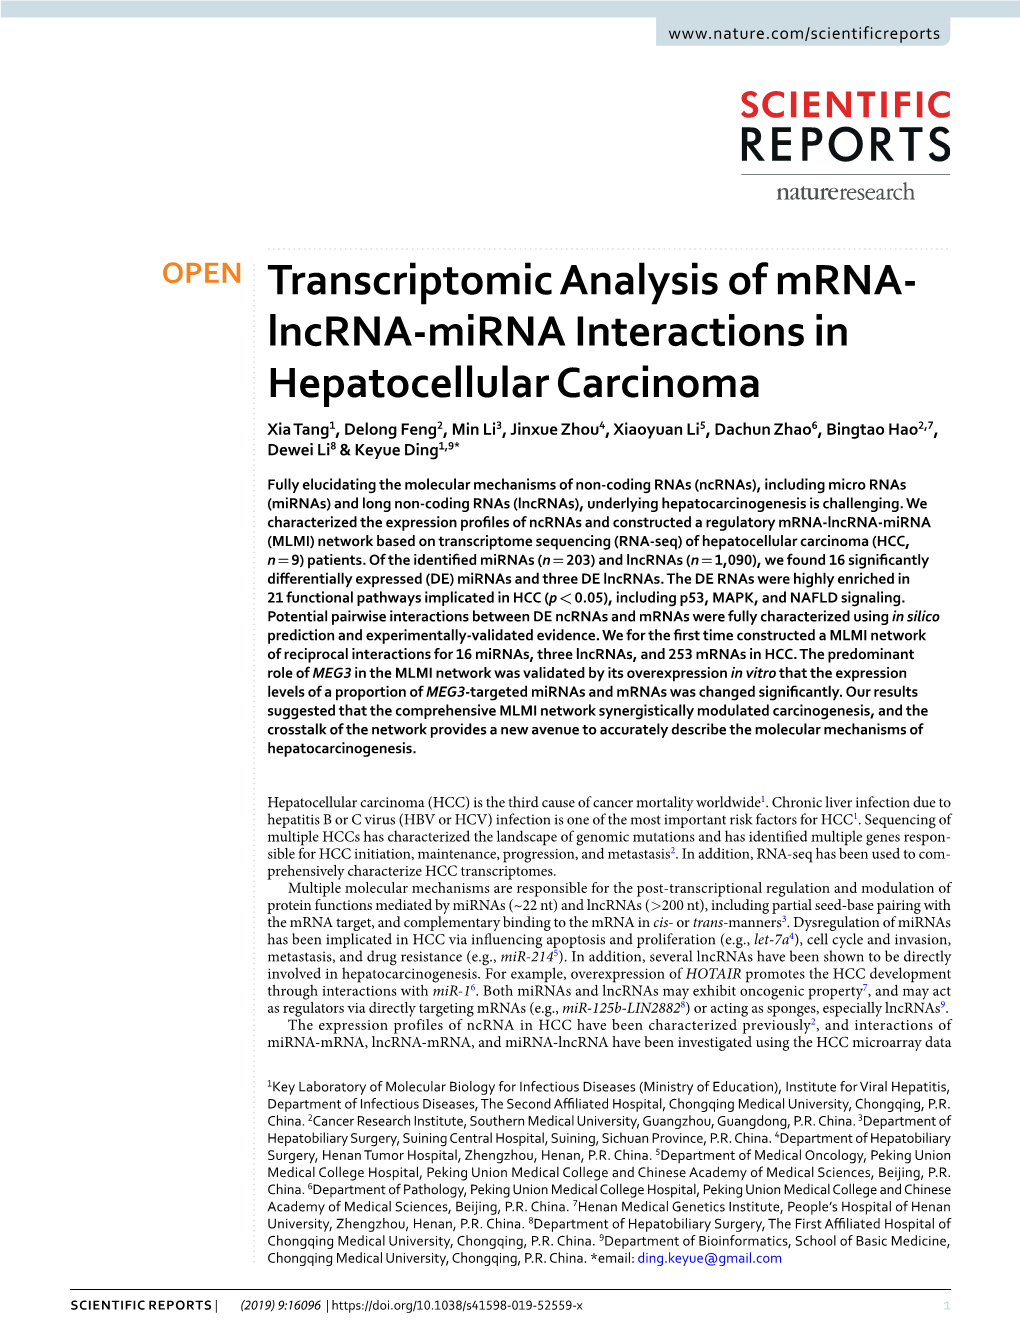 Transcriptomic Analysis of Mrna-Lncrna-Mirna Interactions